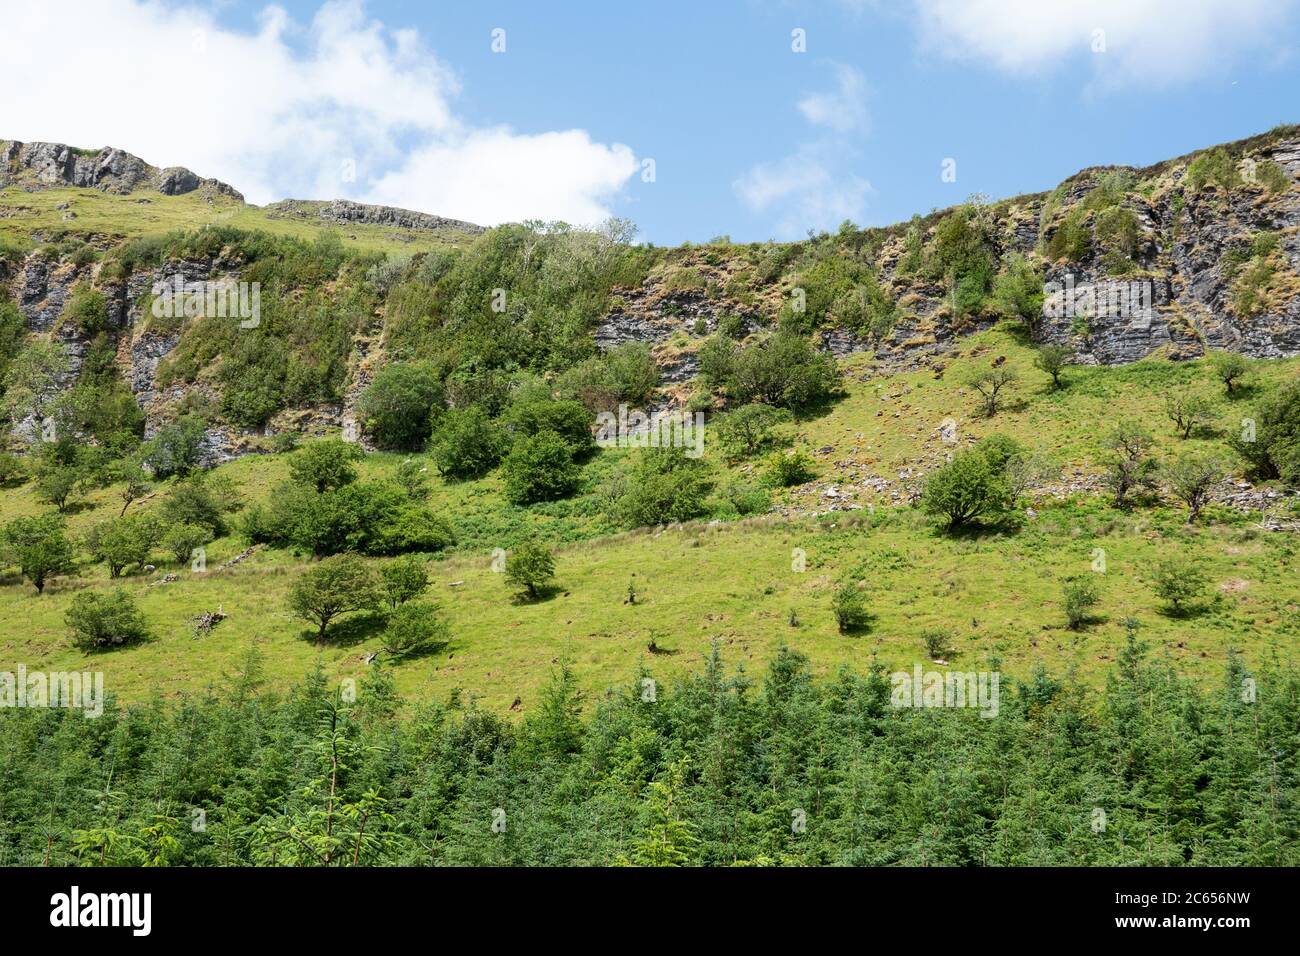 The magnificent Rock or Cliff face in County Sligo Stock Photo